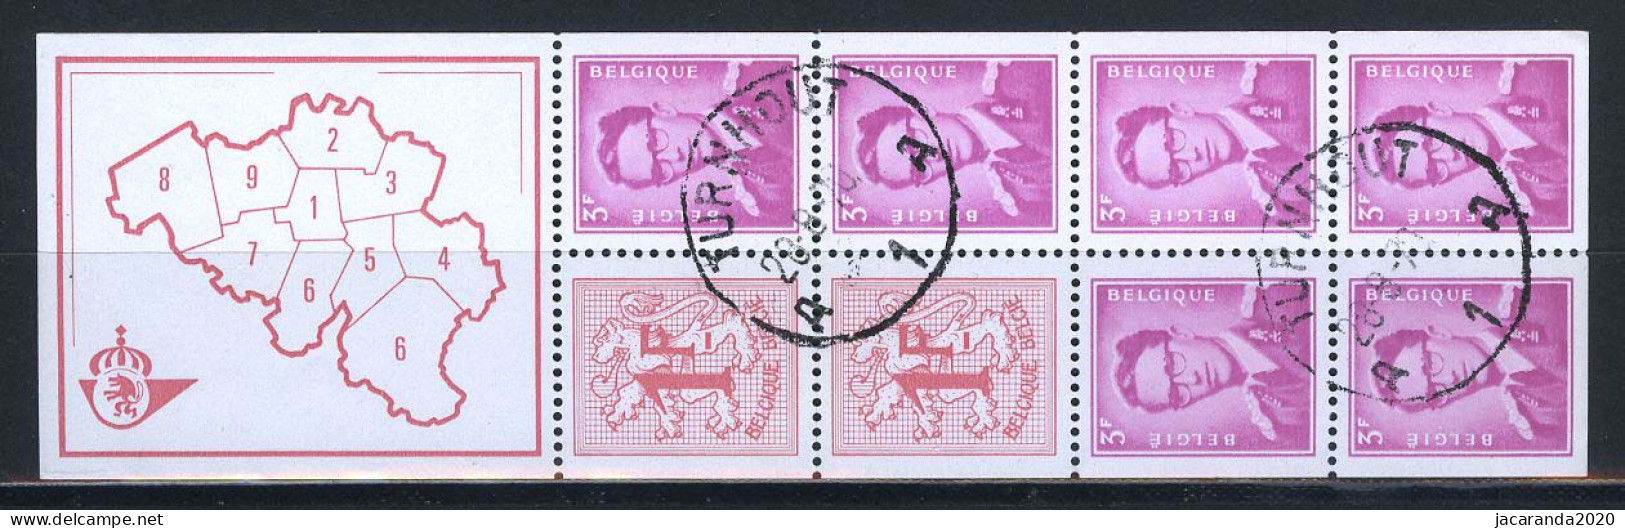 België B2 - Koning Boudewijn En Heraldieke Leeuw - Gestempeld - Oblitéré - Used  - 1953-2006 Modernos [B]